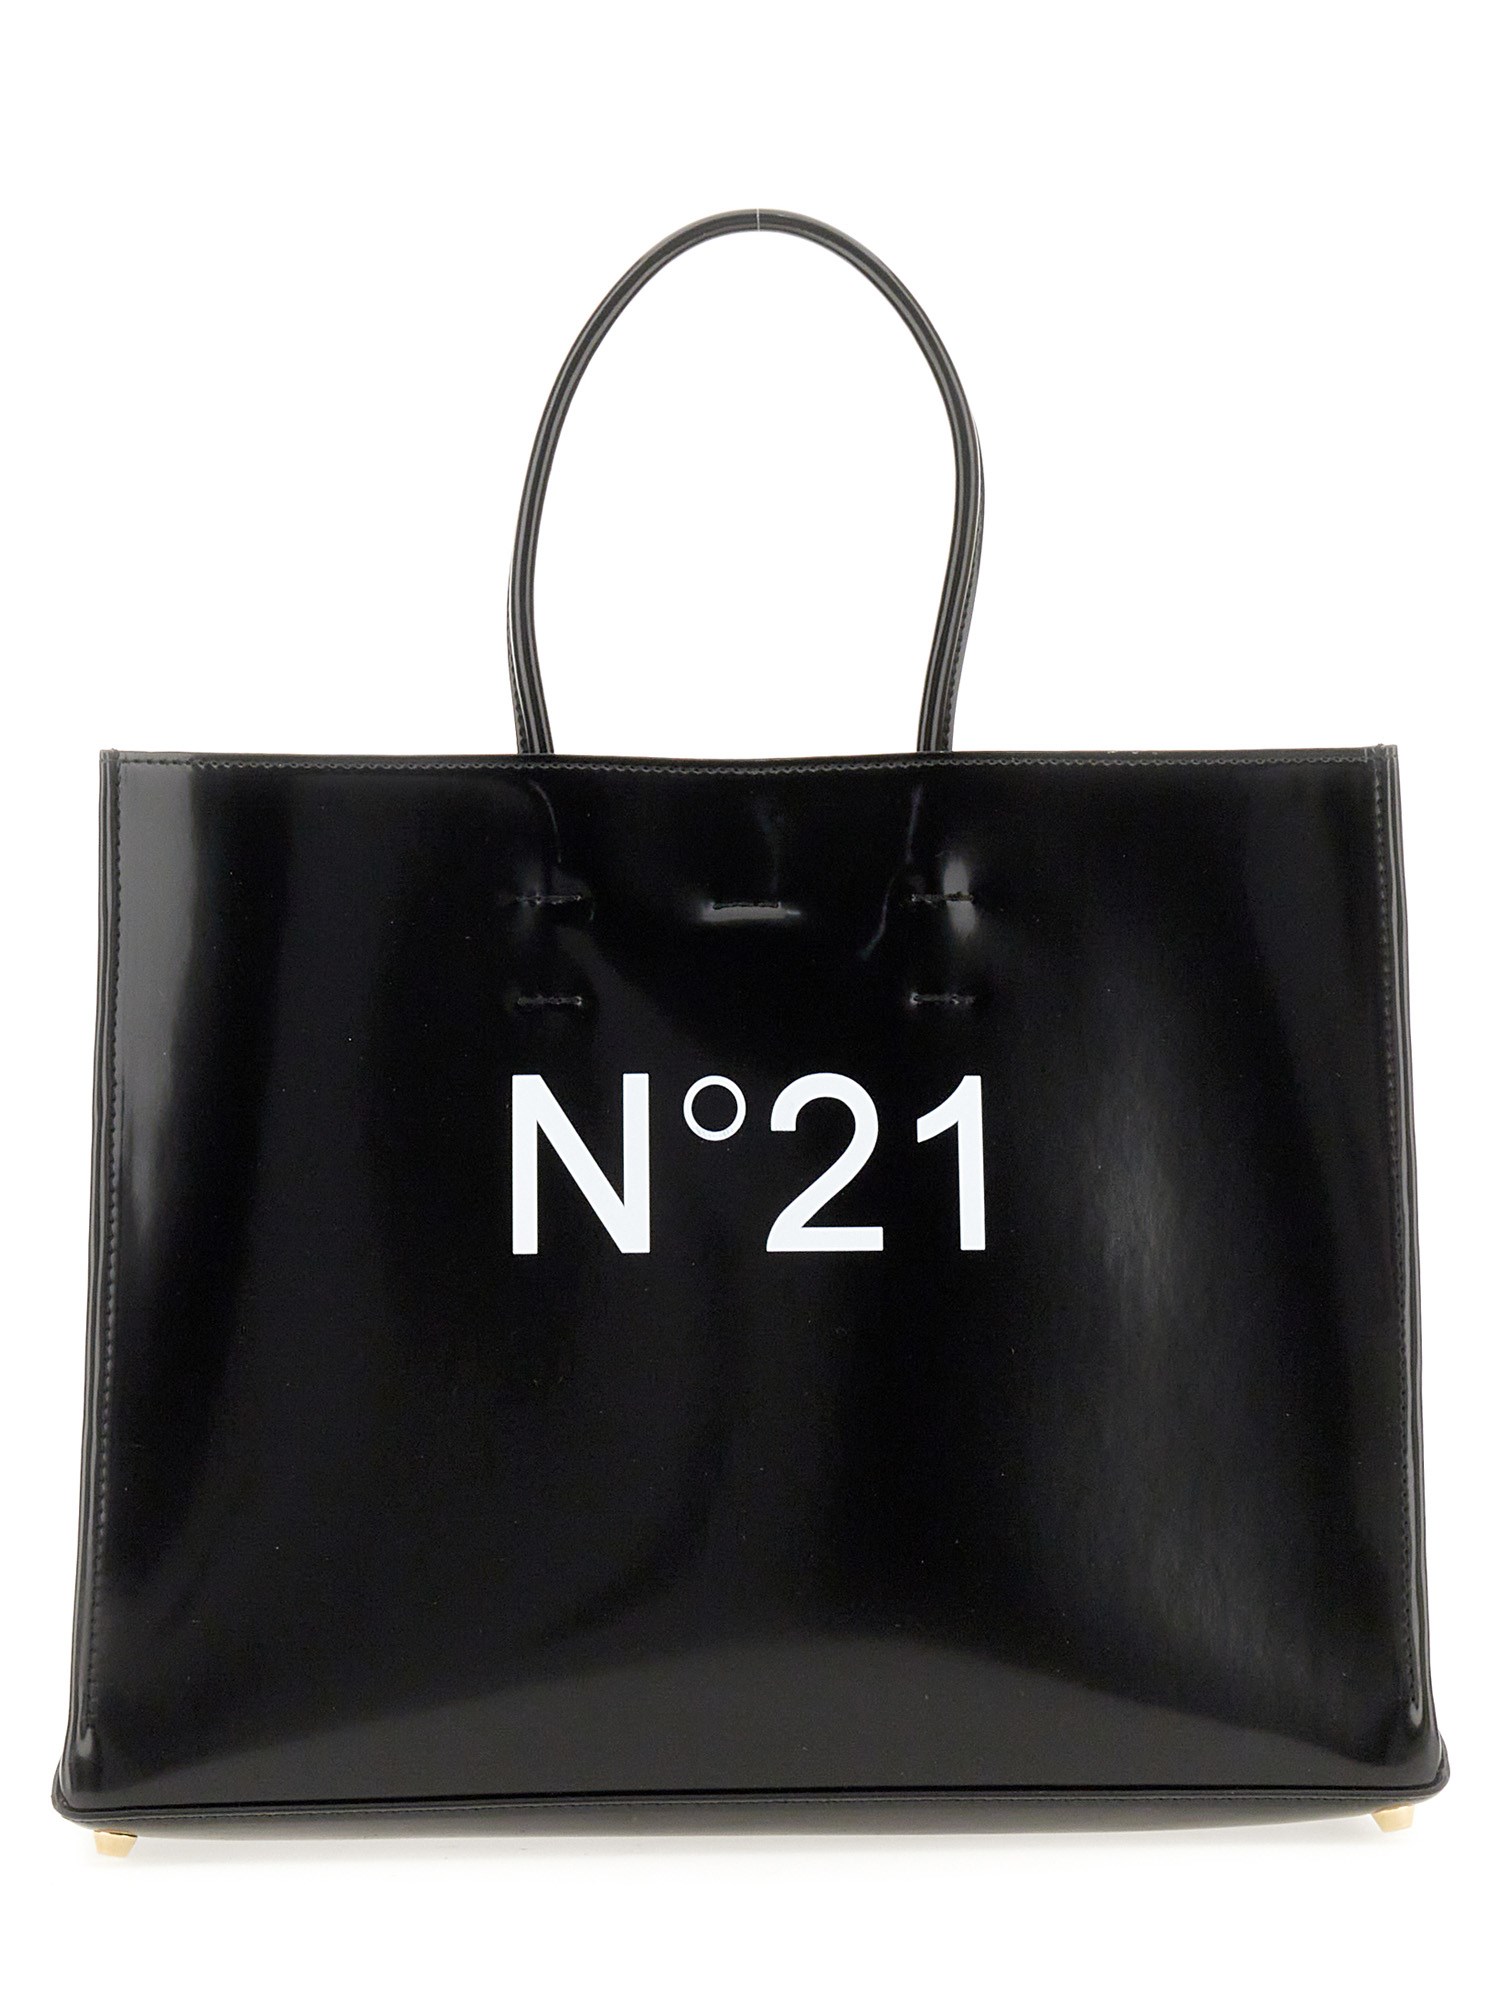 n°21 shopper bag with logo